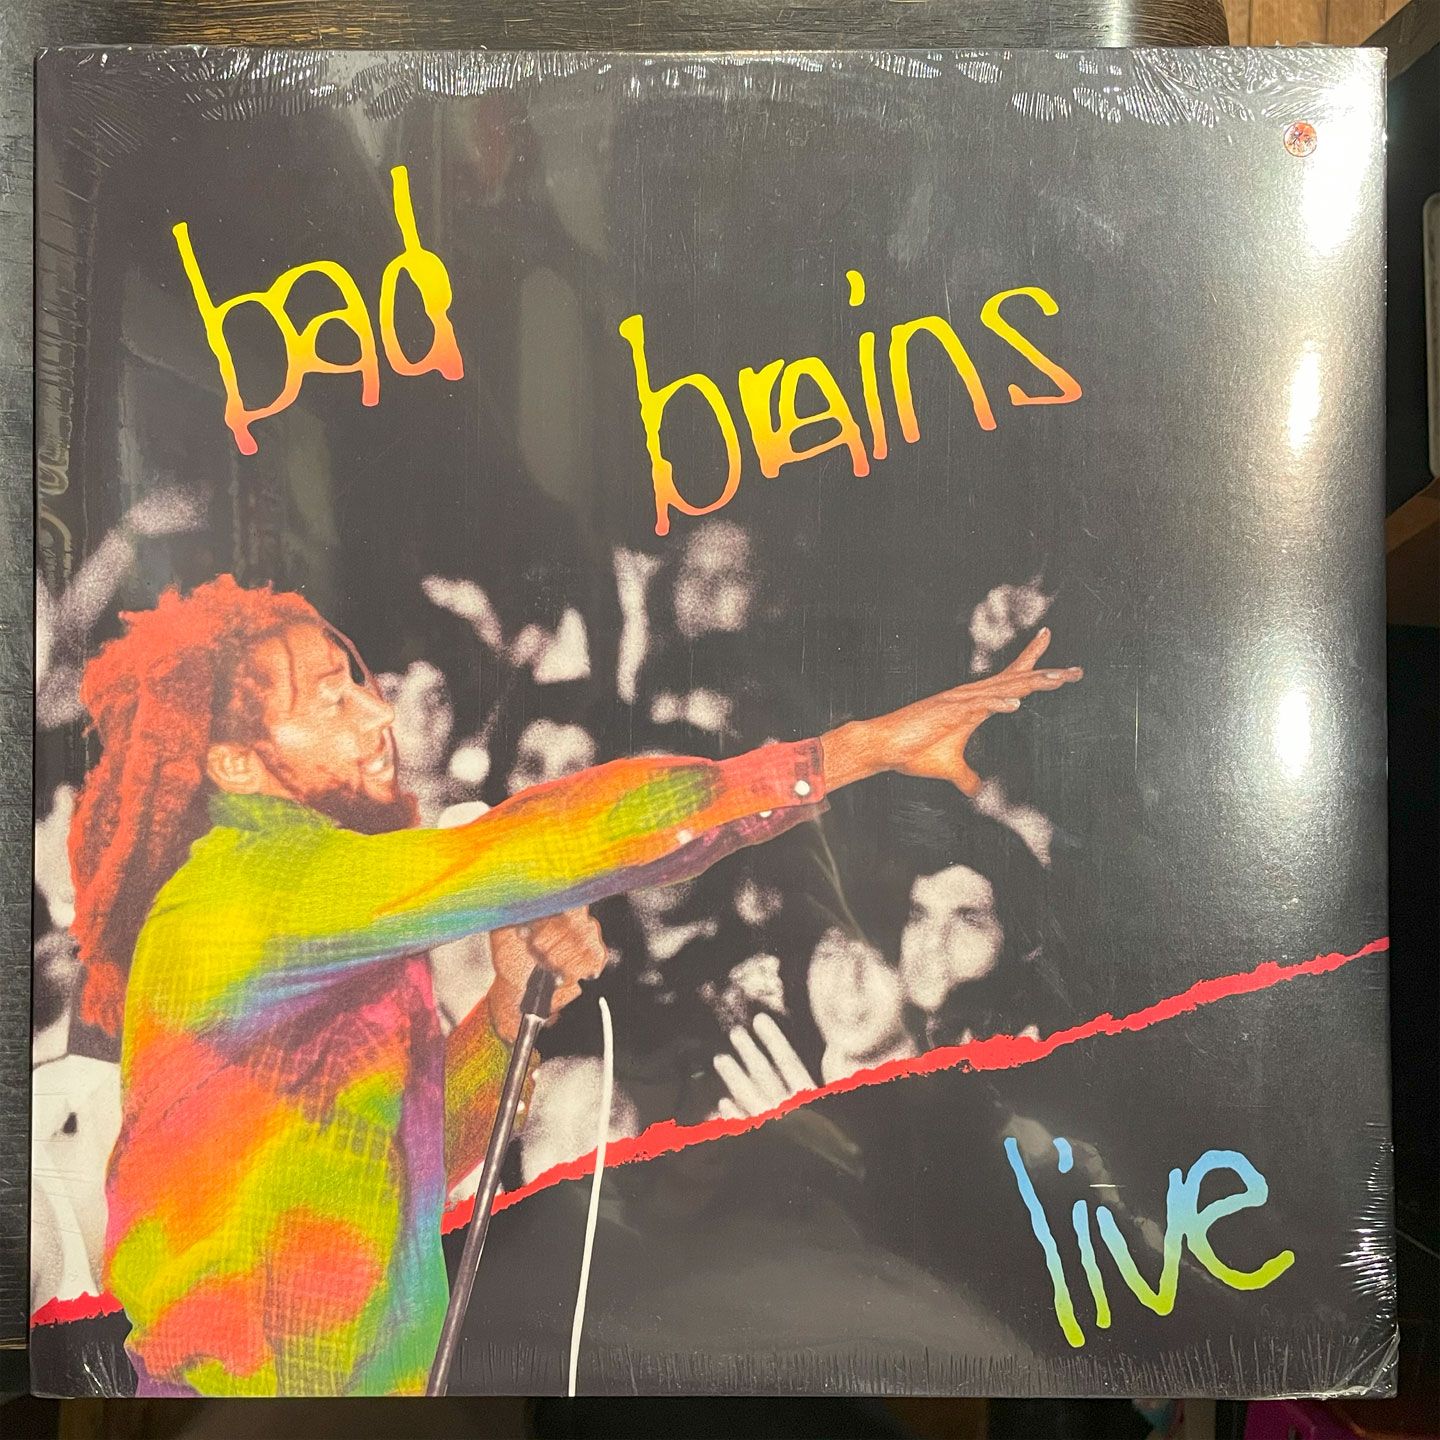 BAD BRAINS 12"LP Live